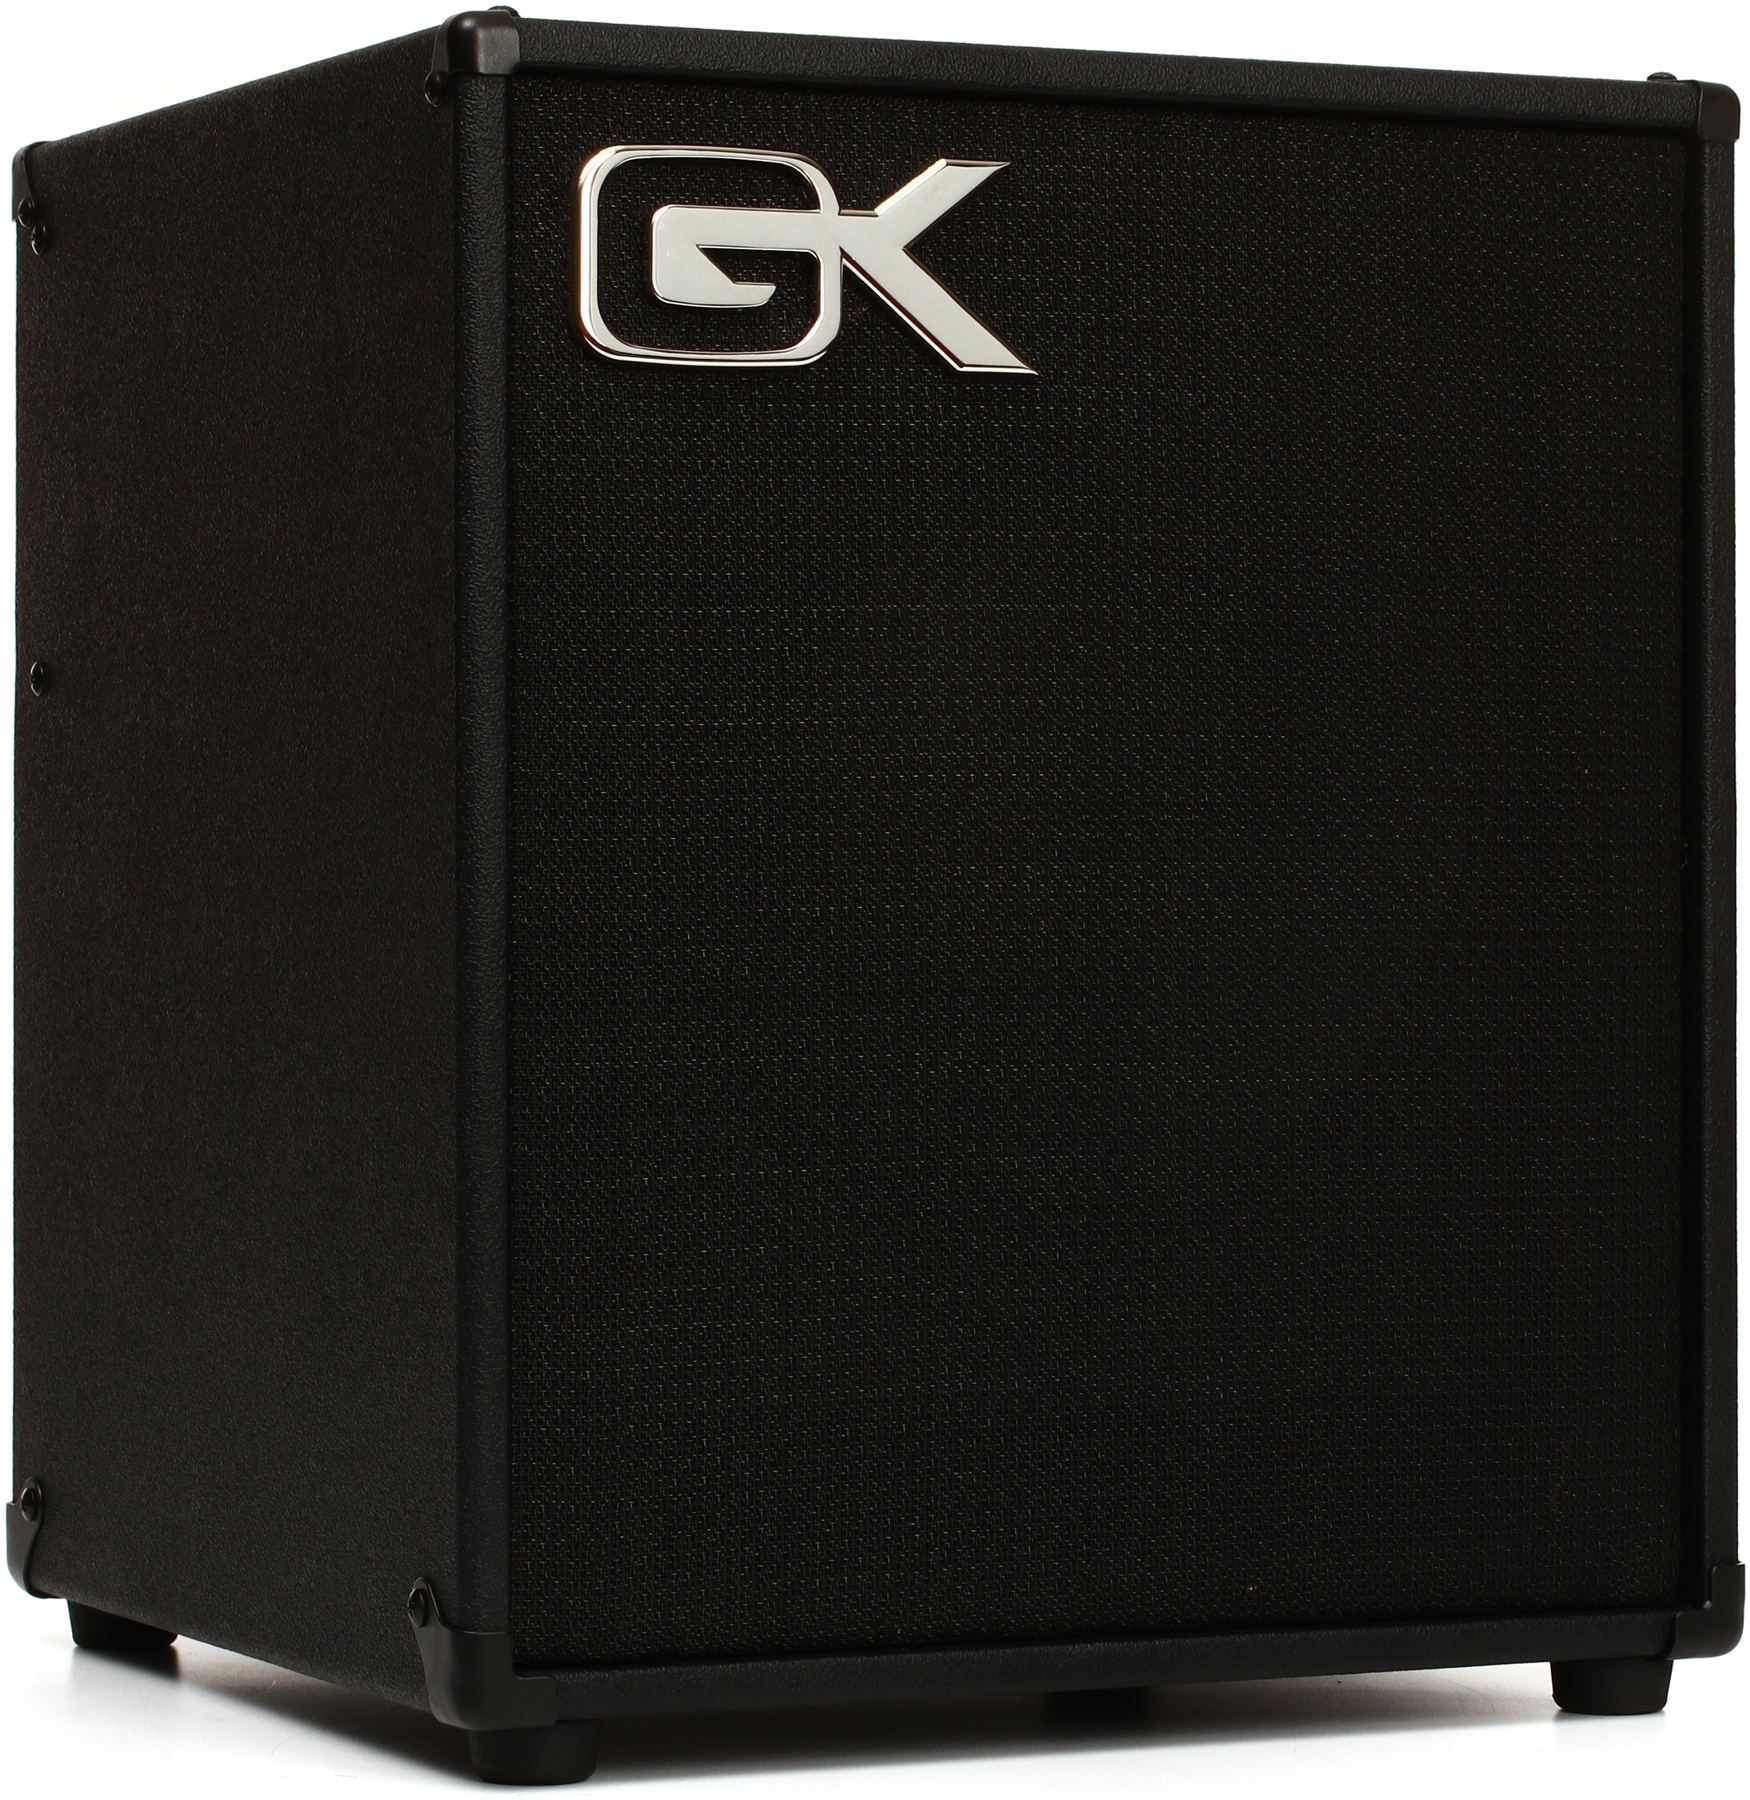 Gallien Krueger Mb 112 Ii 200w 1x12 Black - Bass combo amp - Variation 1